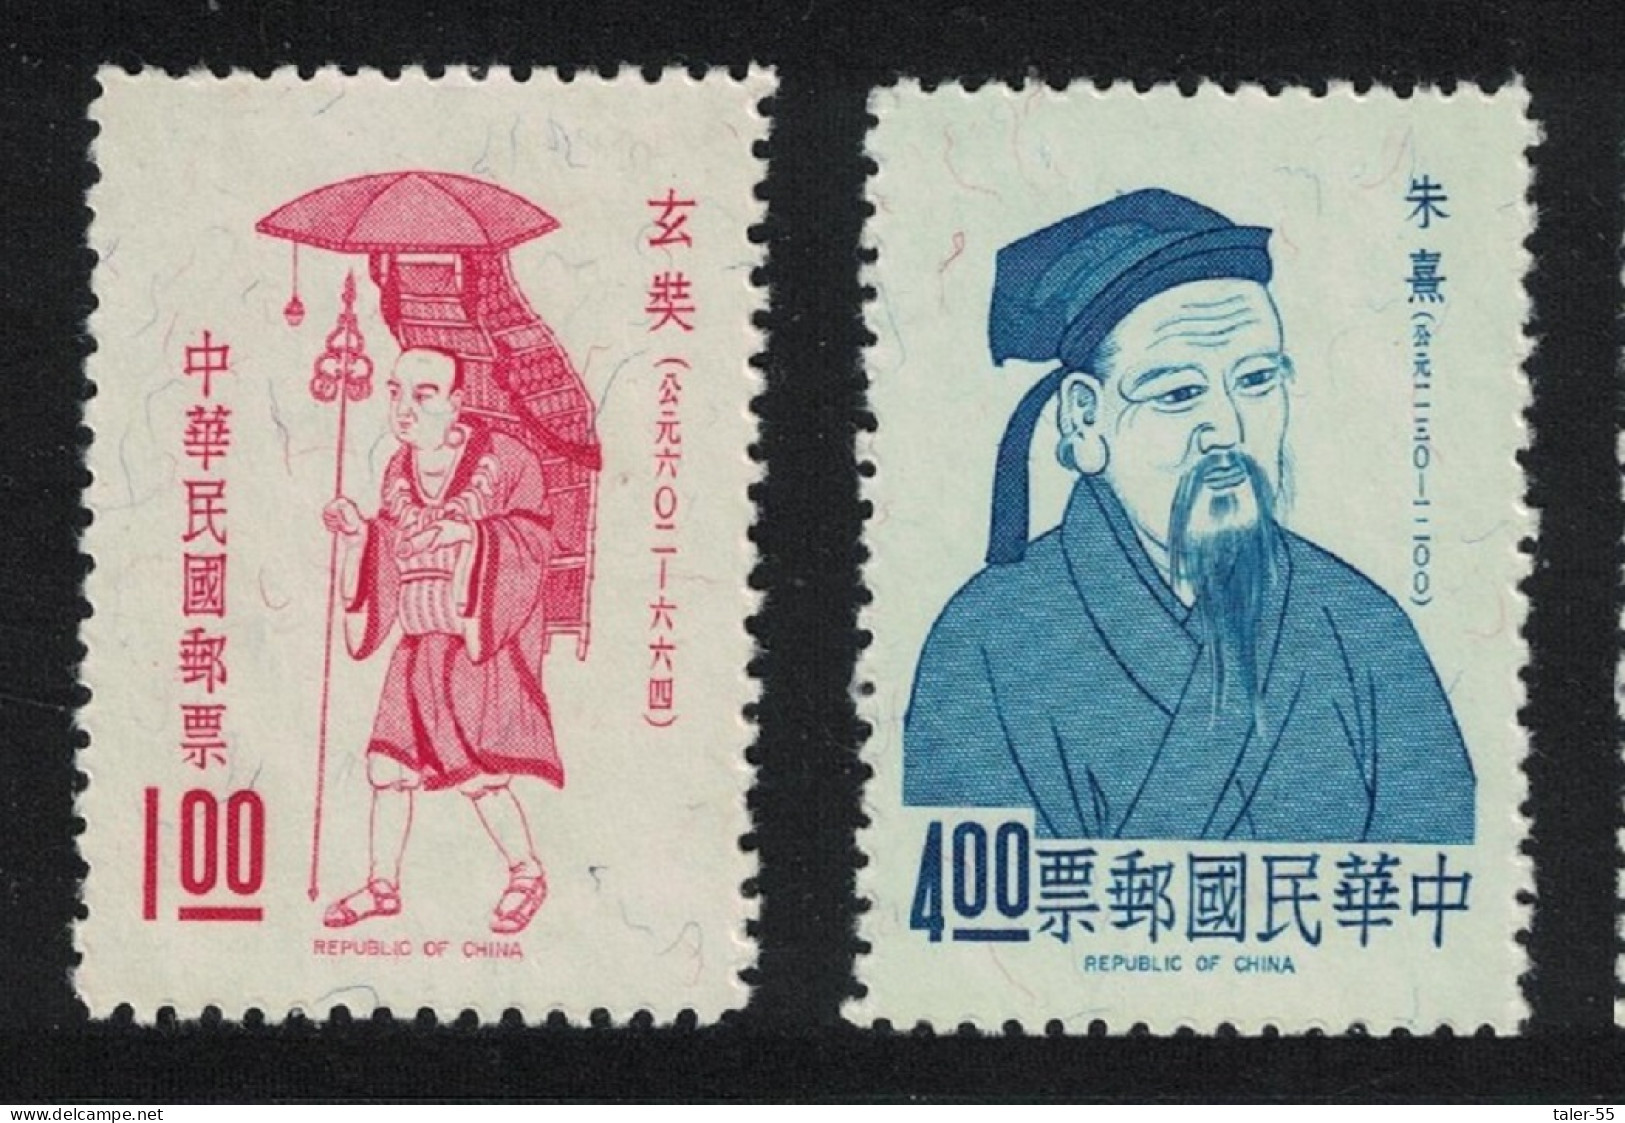 Taiwan Famous Chinese Portraits 2v 1970 MNH SG#738+740 - Nuovi